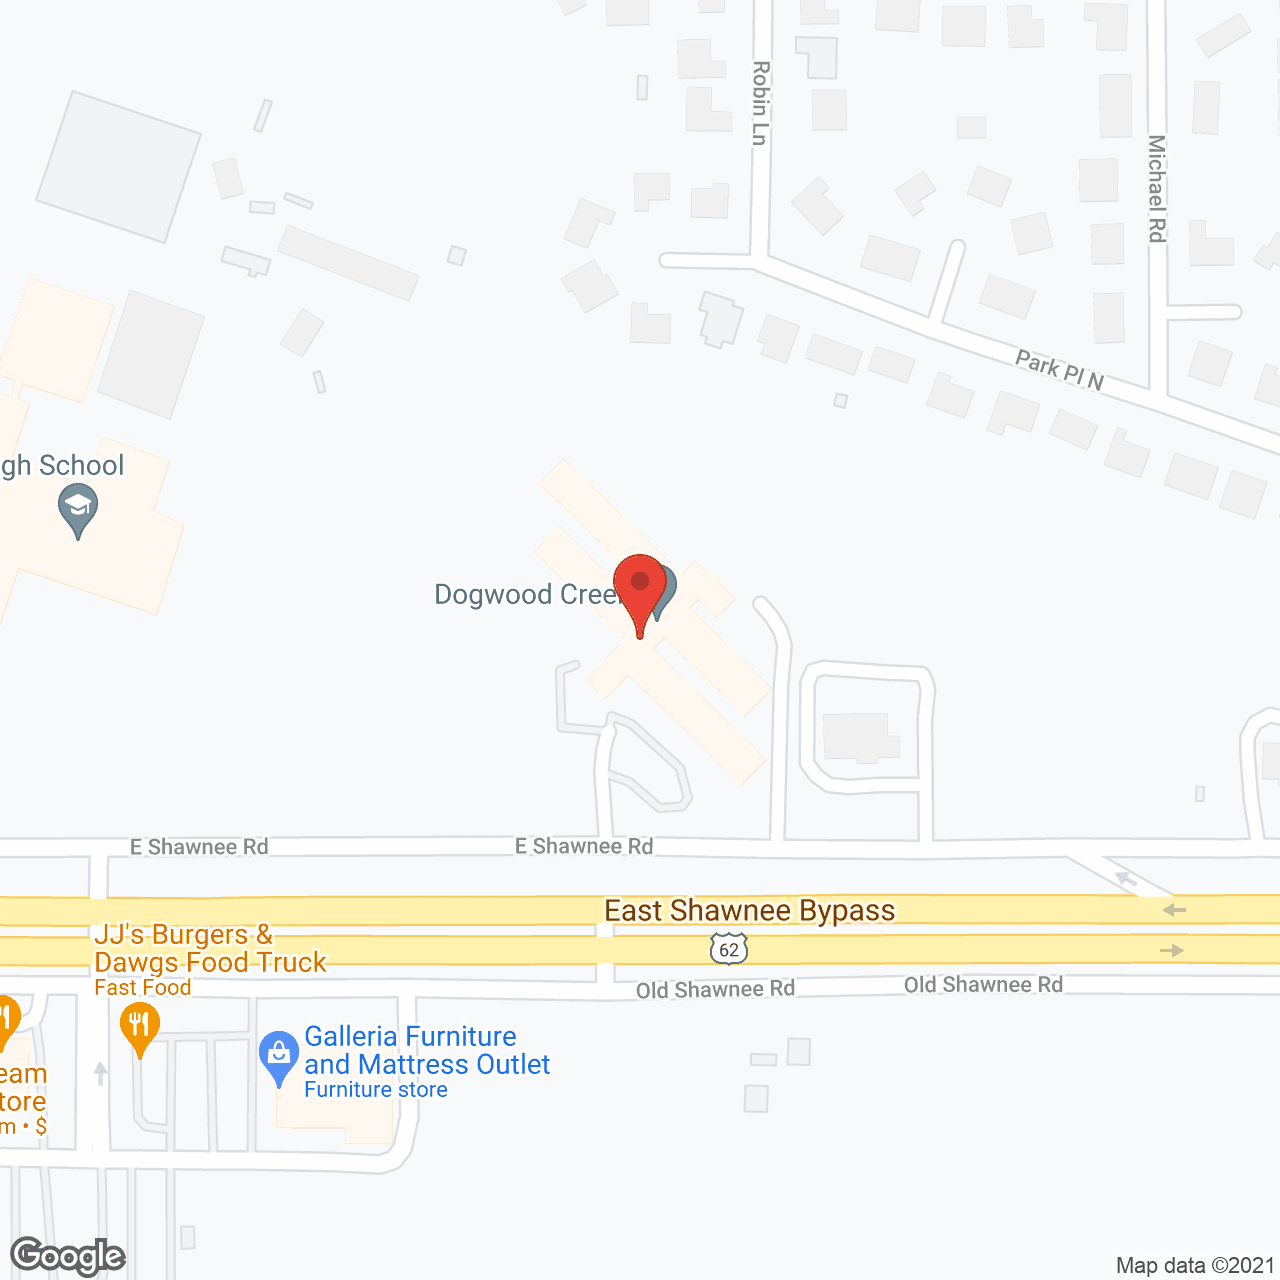 Dogwood Creek Retirement Center in google map